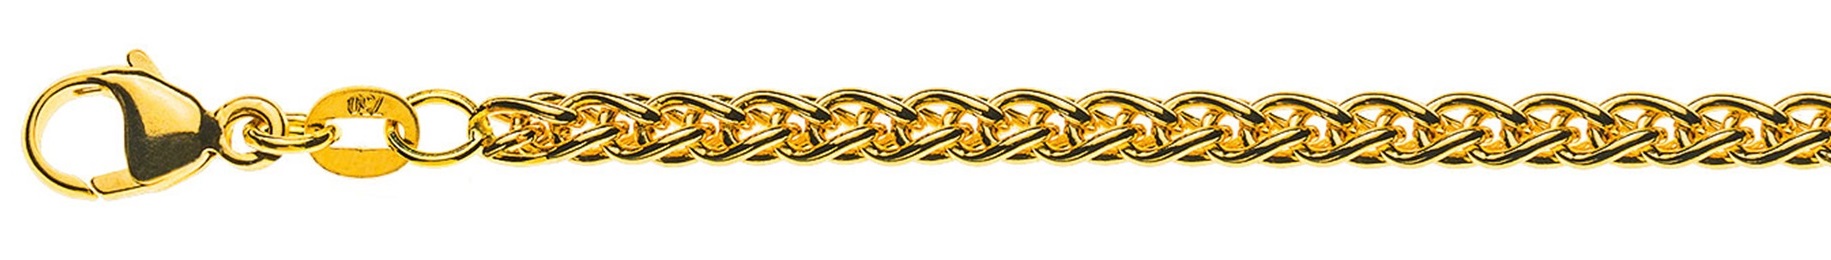 AURONOS Prestige Collier en or jaune 18K torsadé 45cm 3.3mm